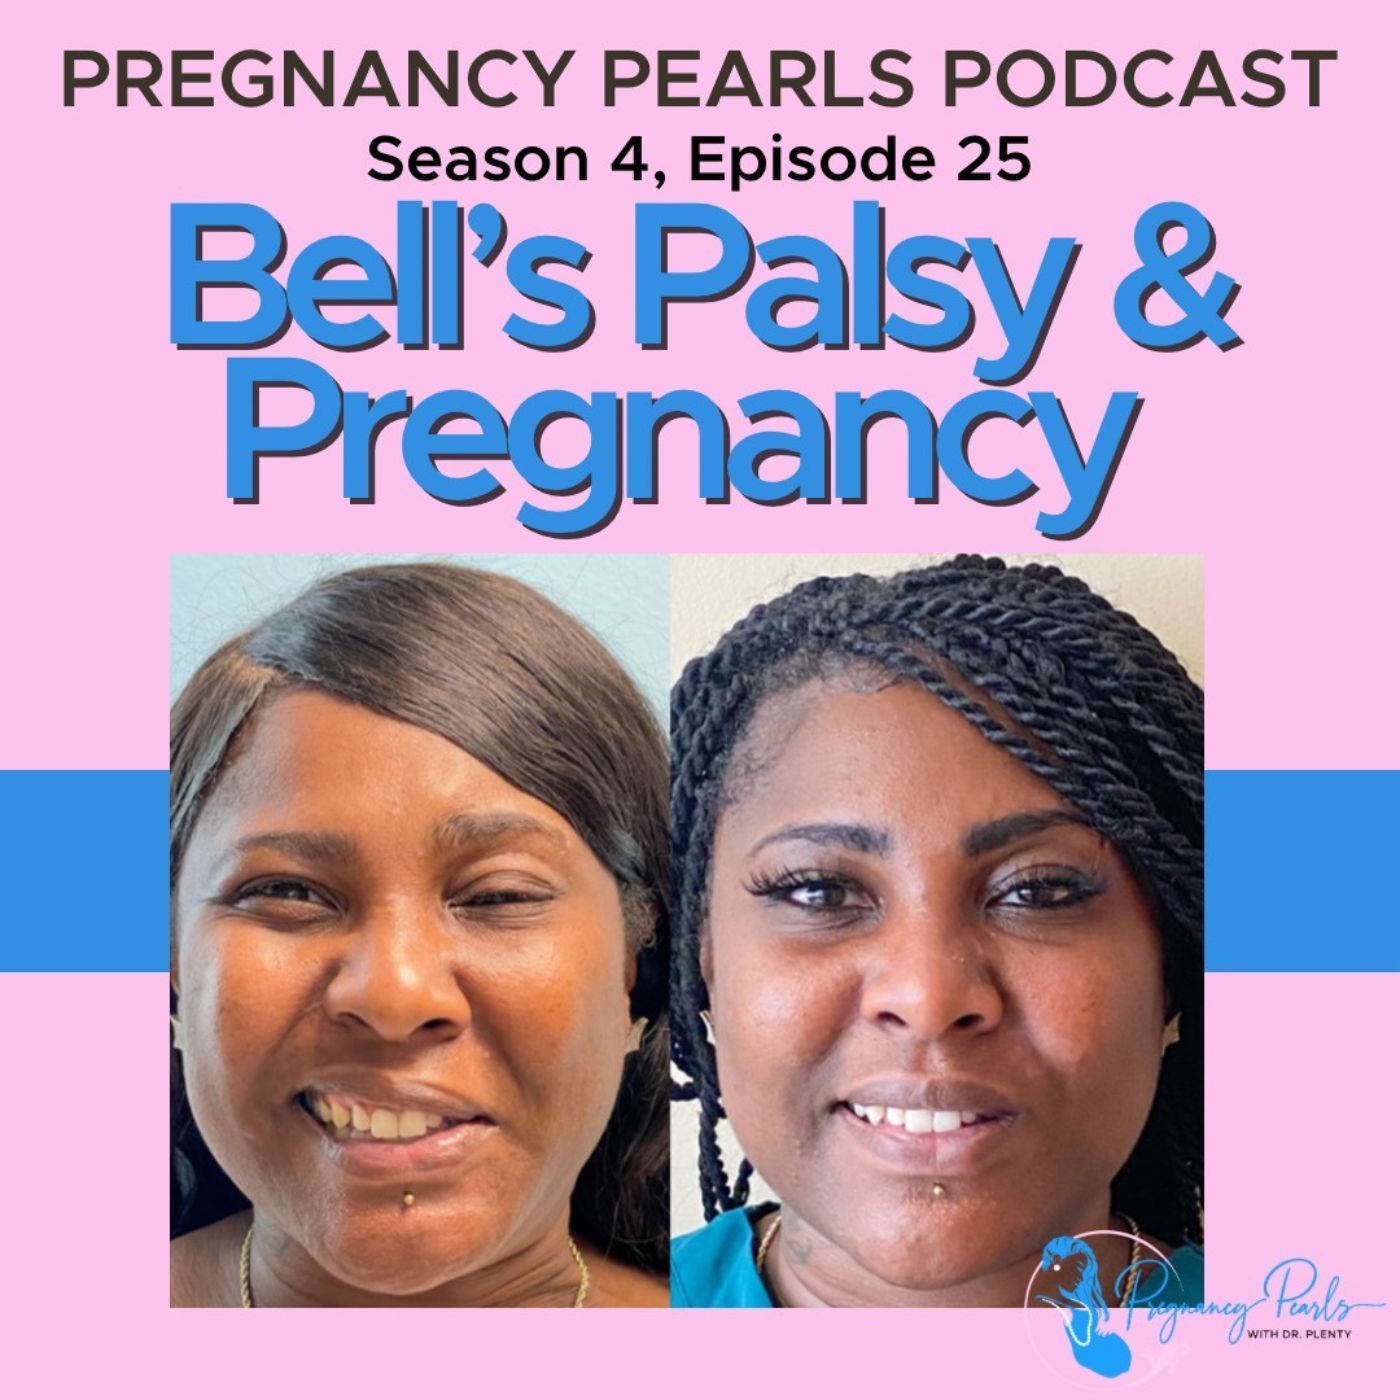 Bell’s Palsy & Pregnancy